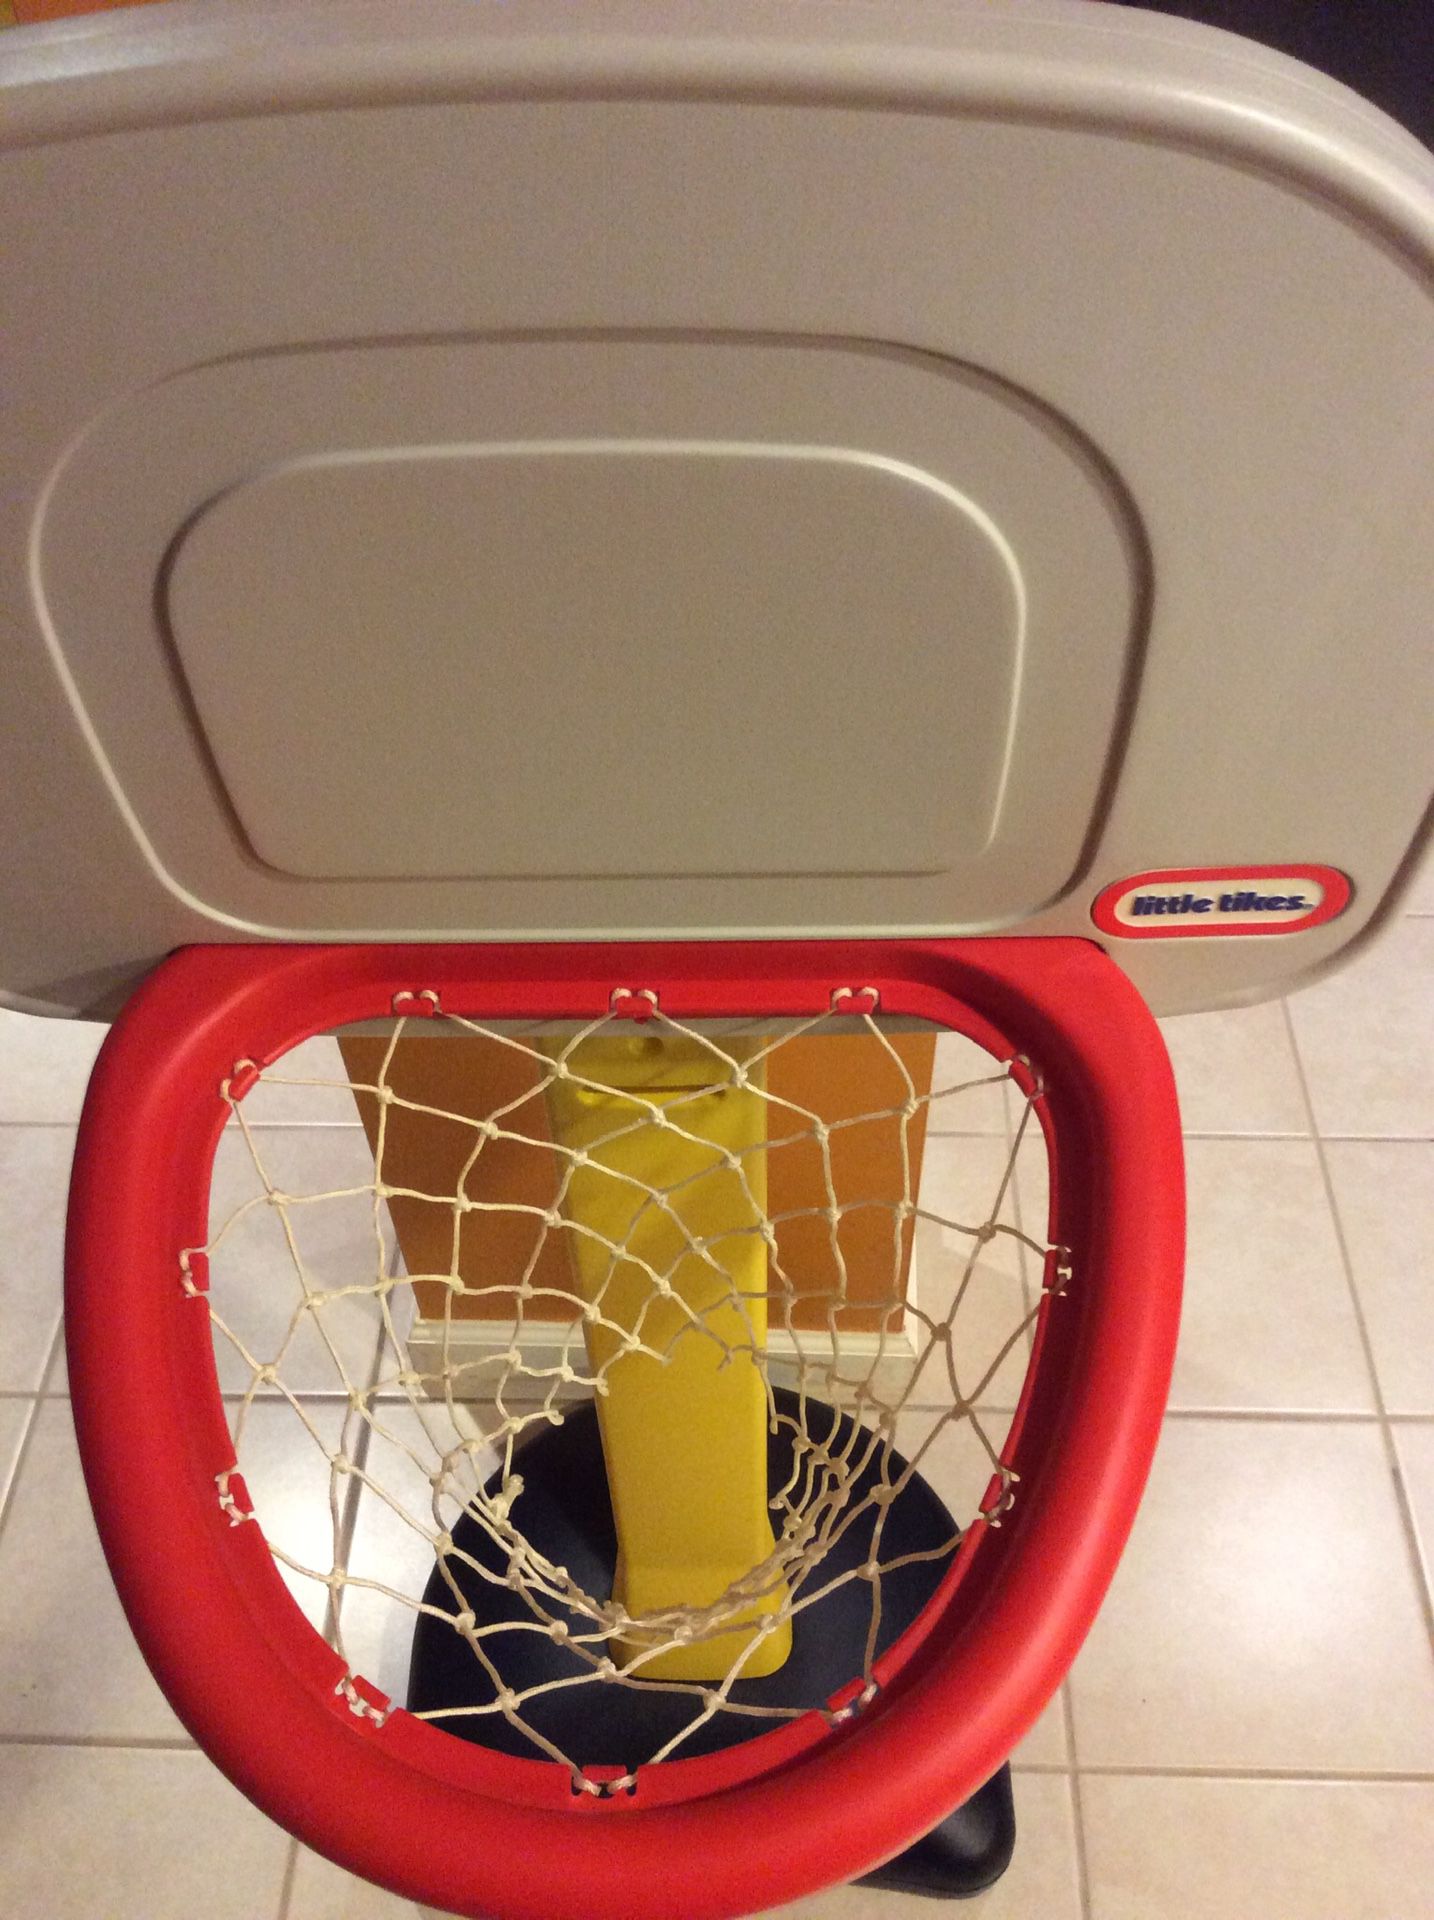 Adjustable basketball hoop. Indoor use only.